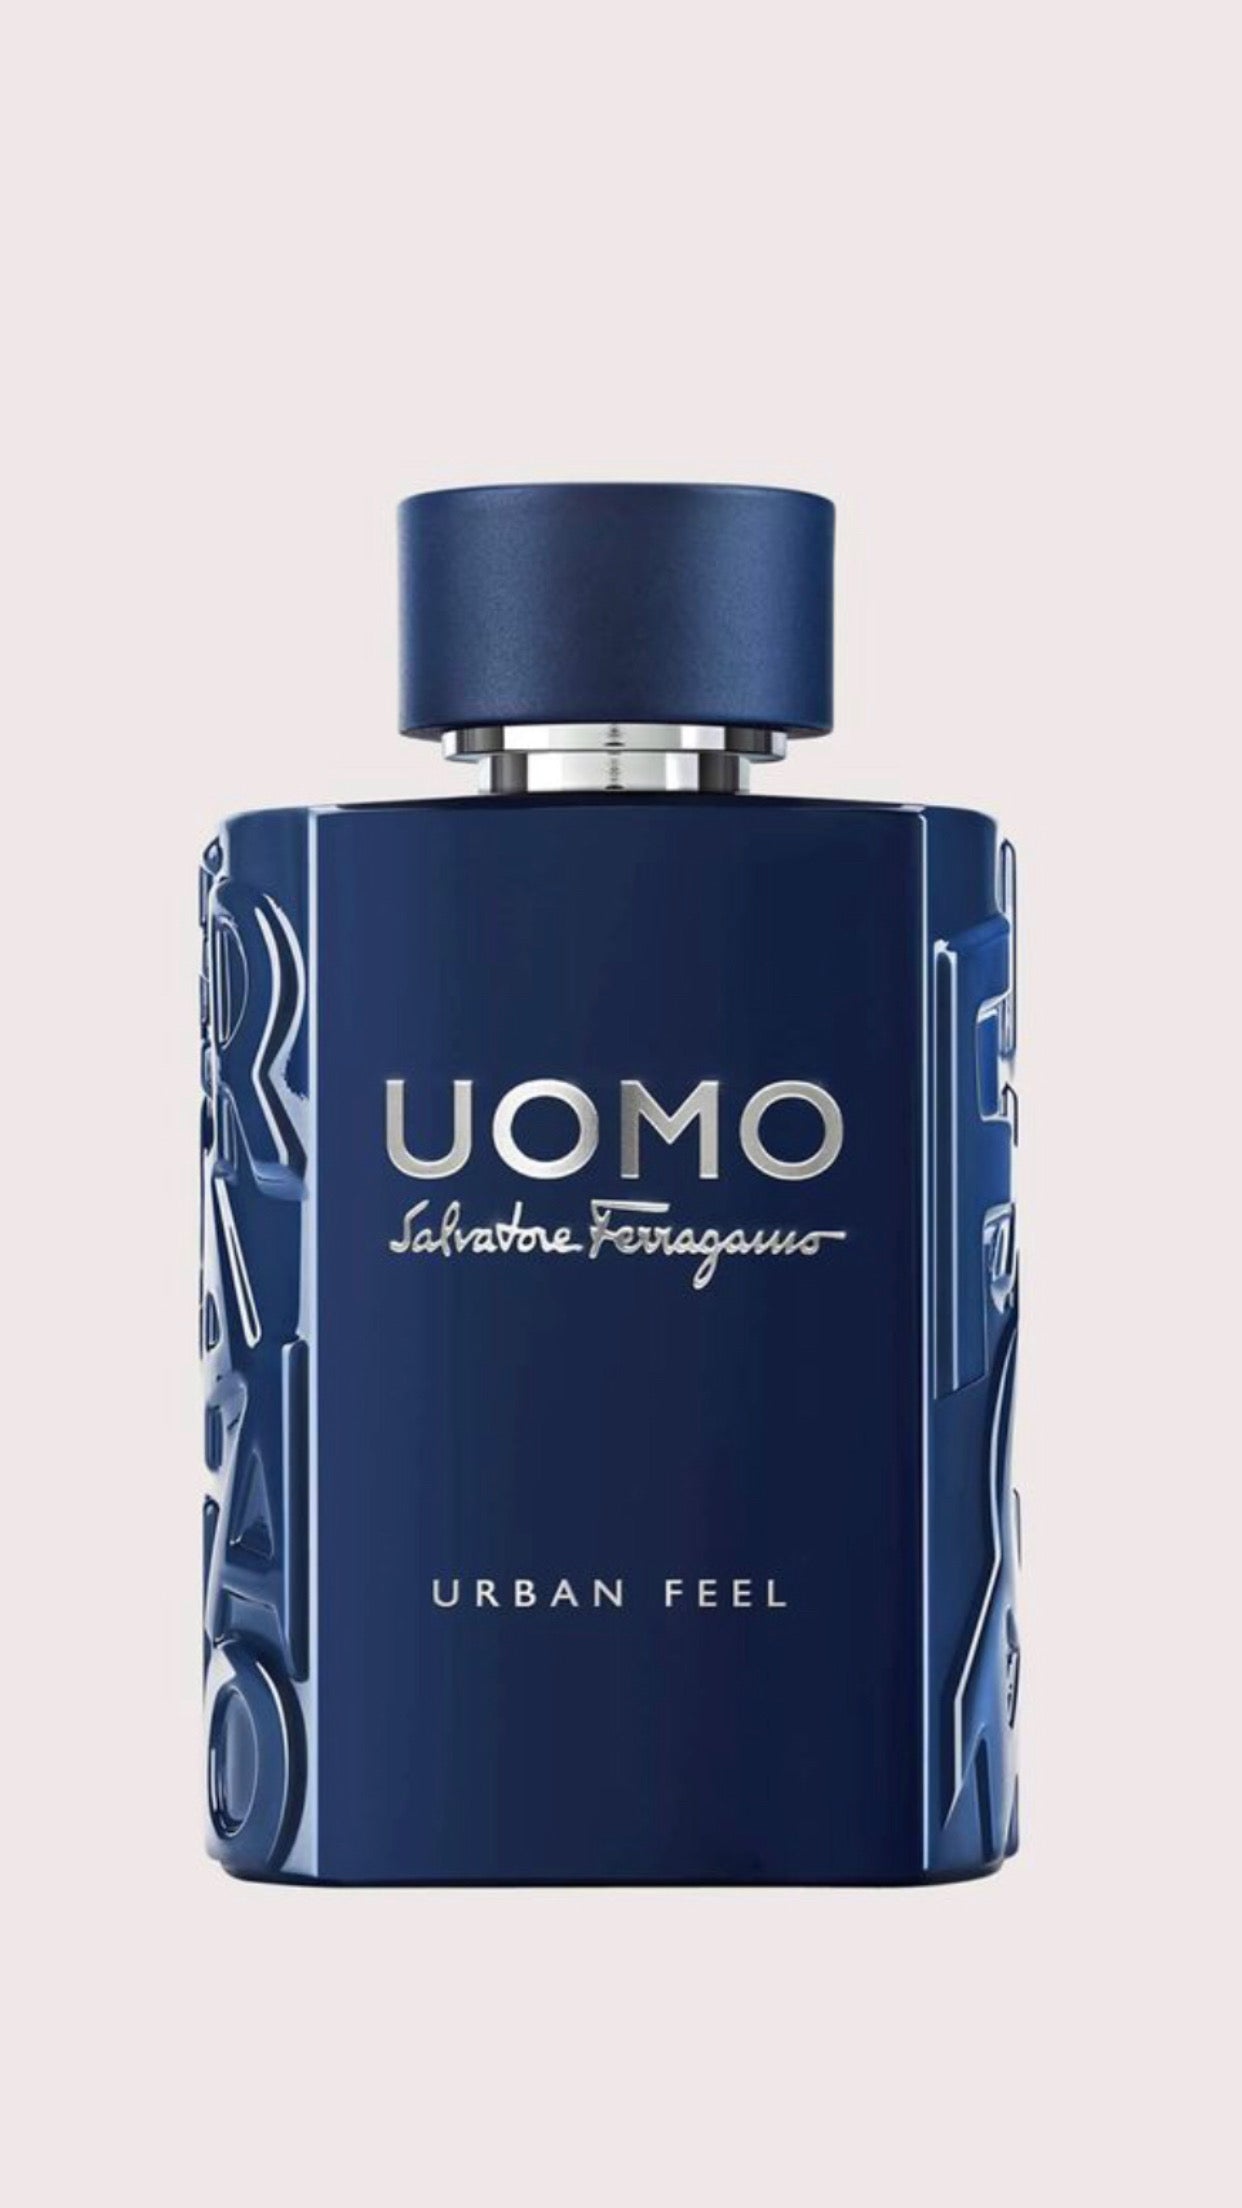 UOMO Salvatore Ferragamo (Urban Feel)